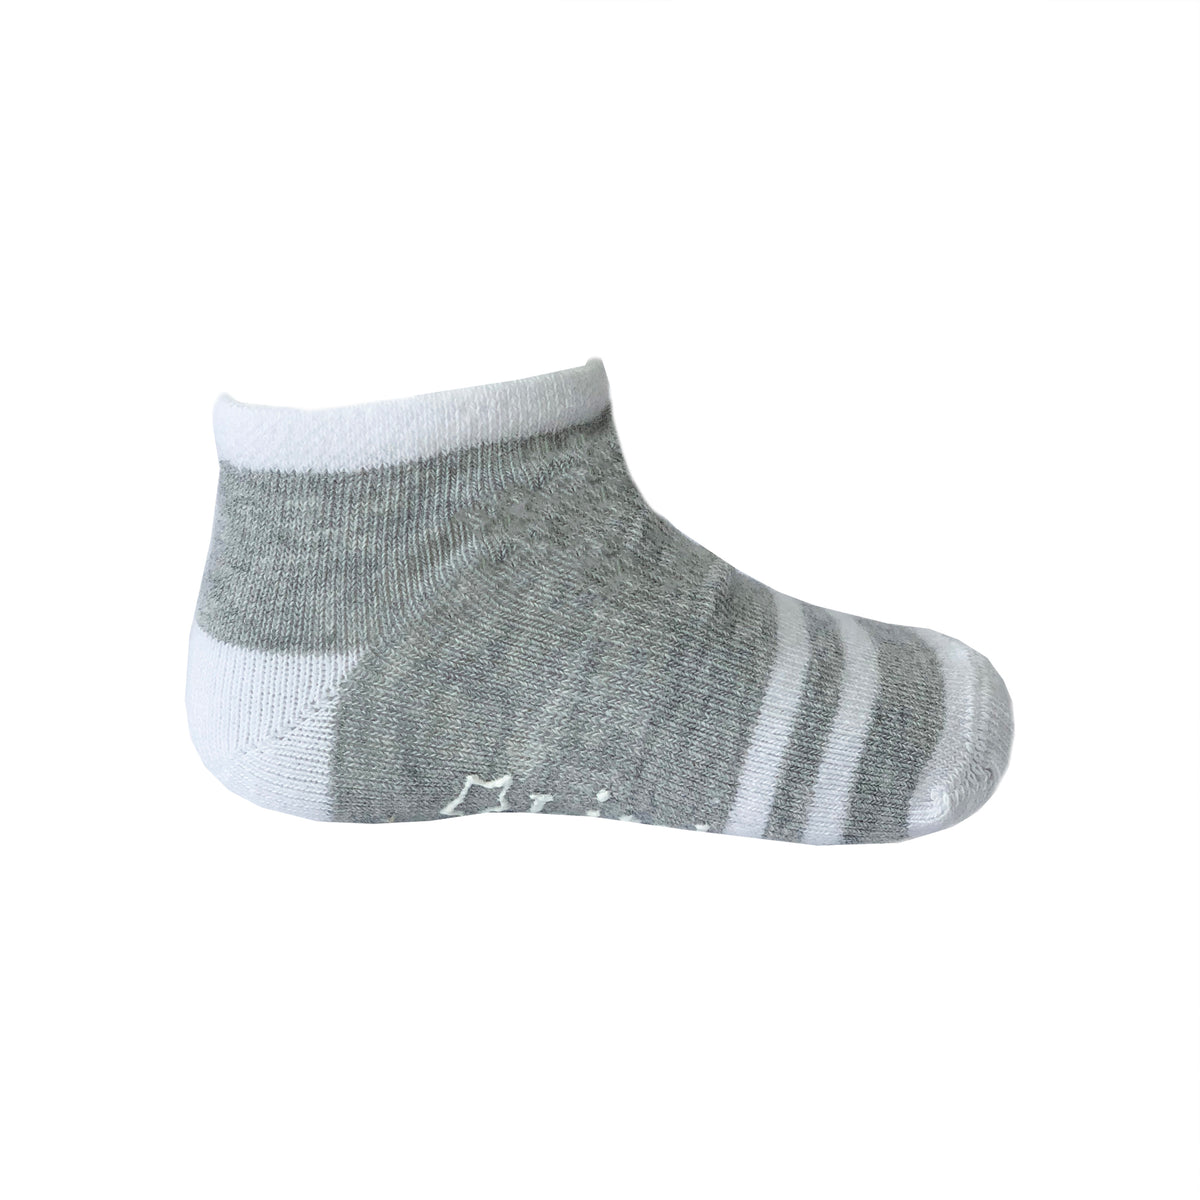 Non-Slip Stay-on Organic Baby and Toddler Trainer Socks - Summer Socks - Grey